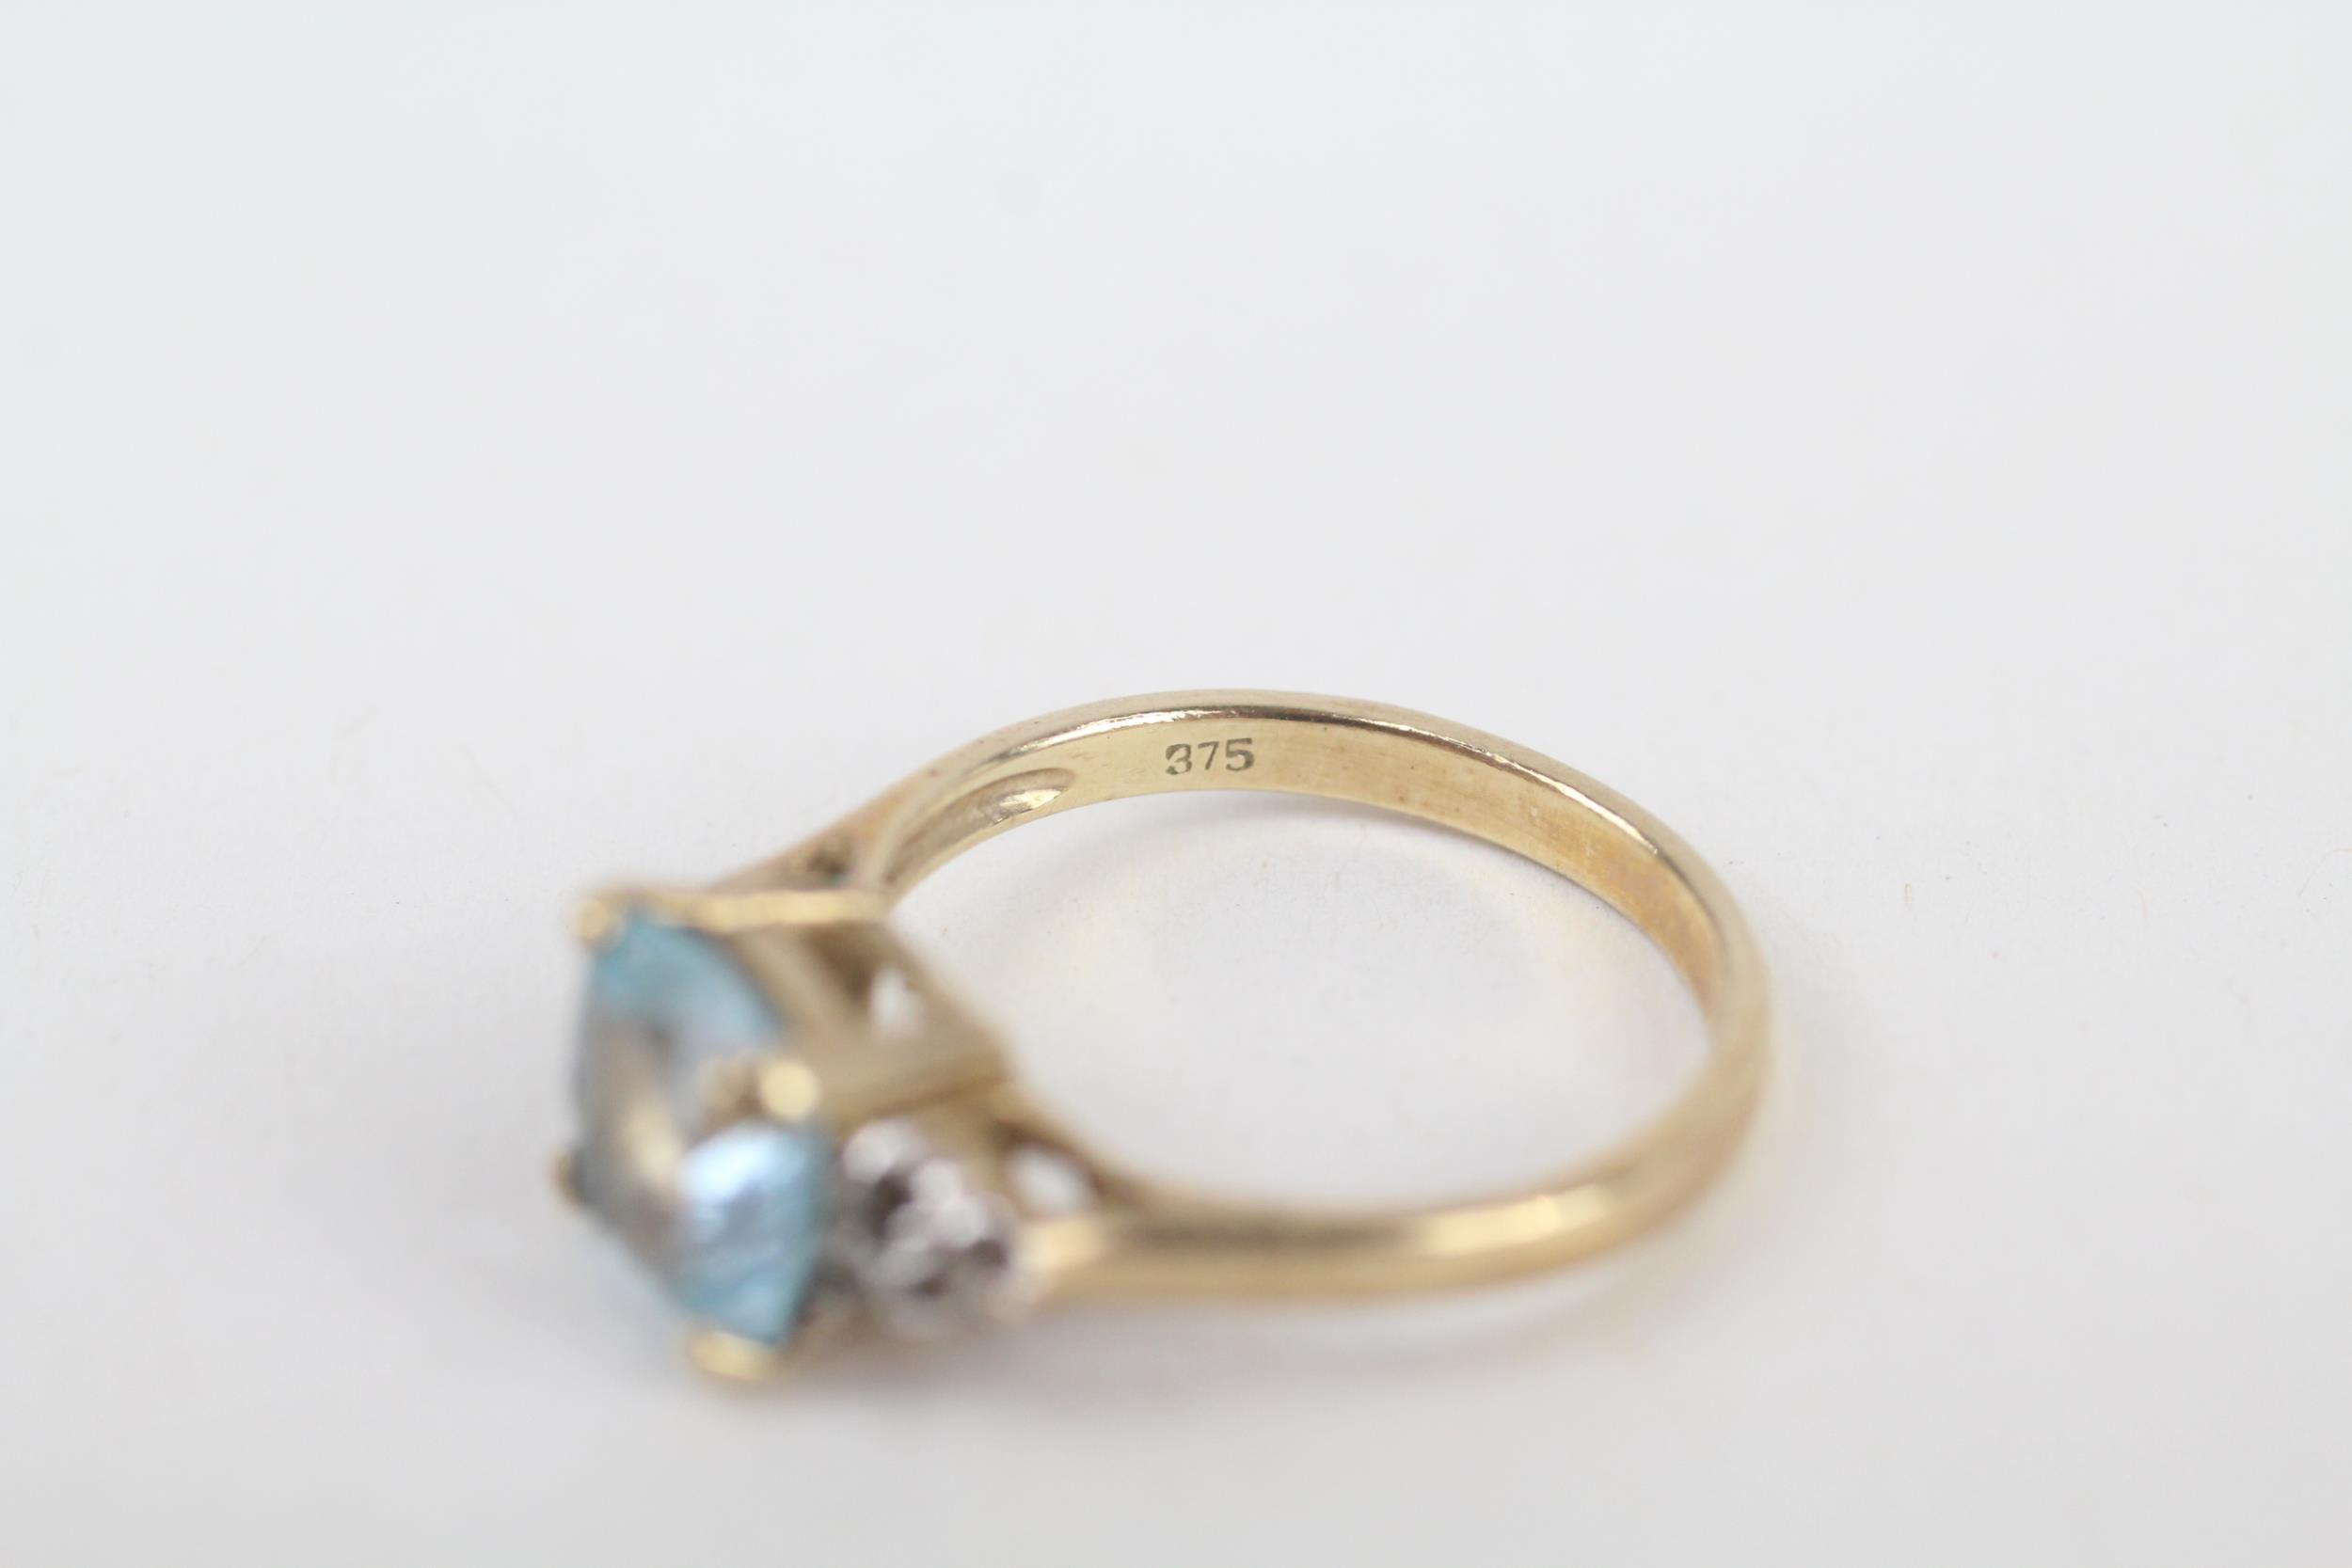 9ct gold diamond & topaz trefoil ring - as seen Size M 2.7 g - Image 4 of 4